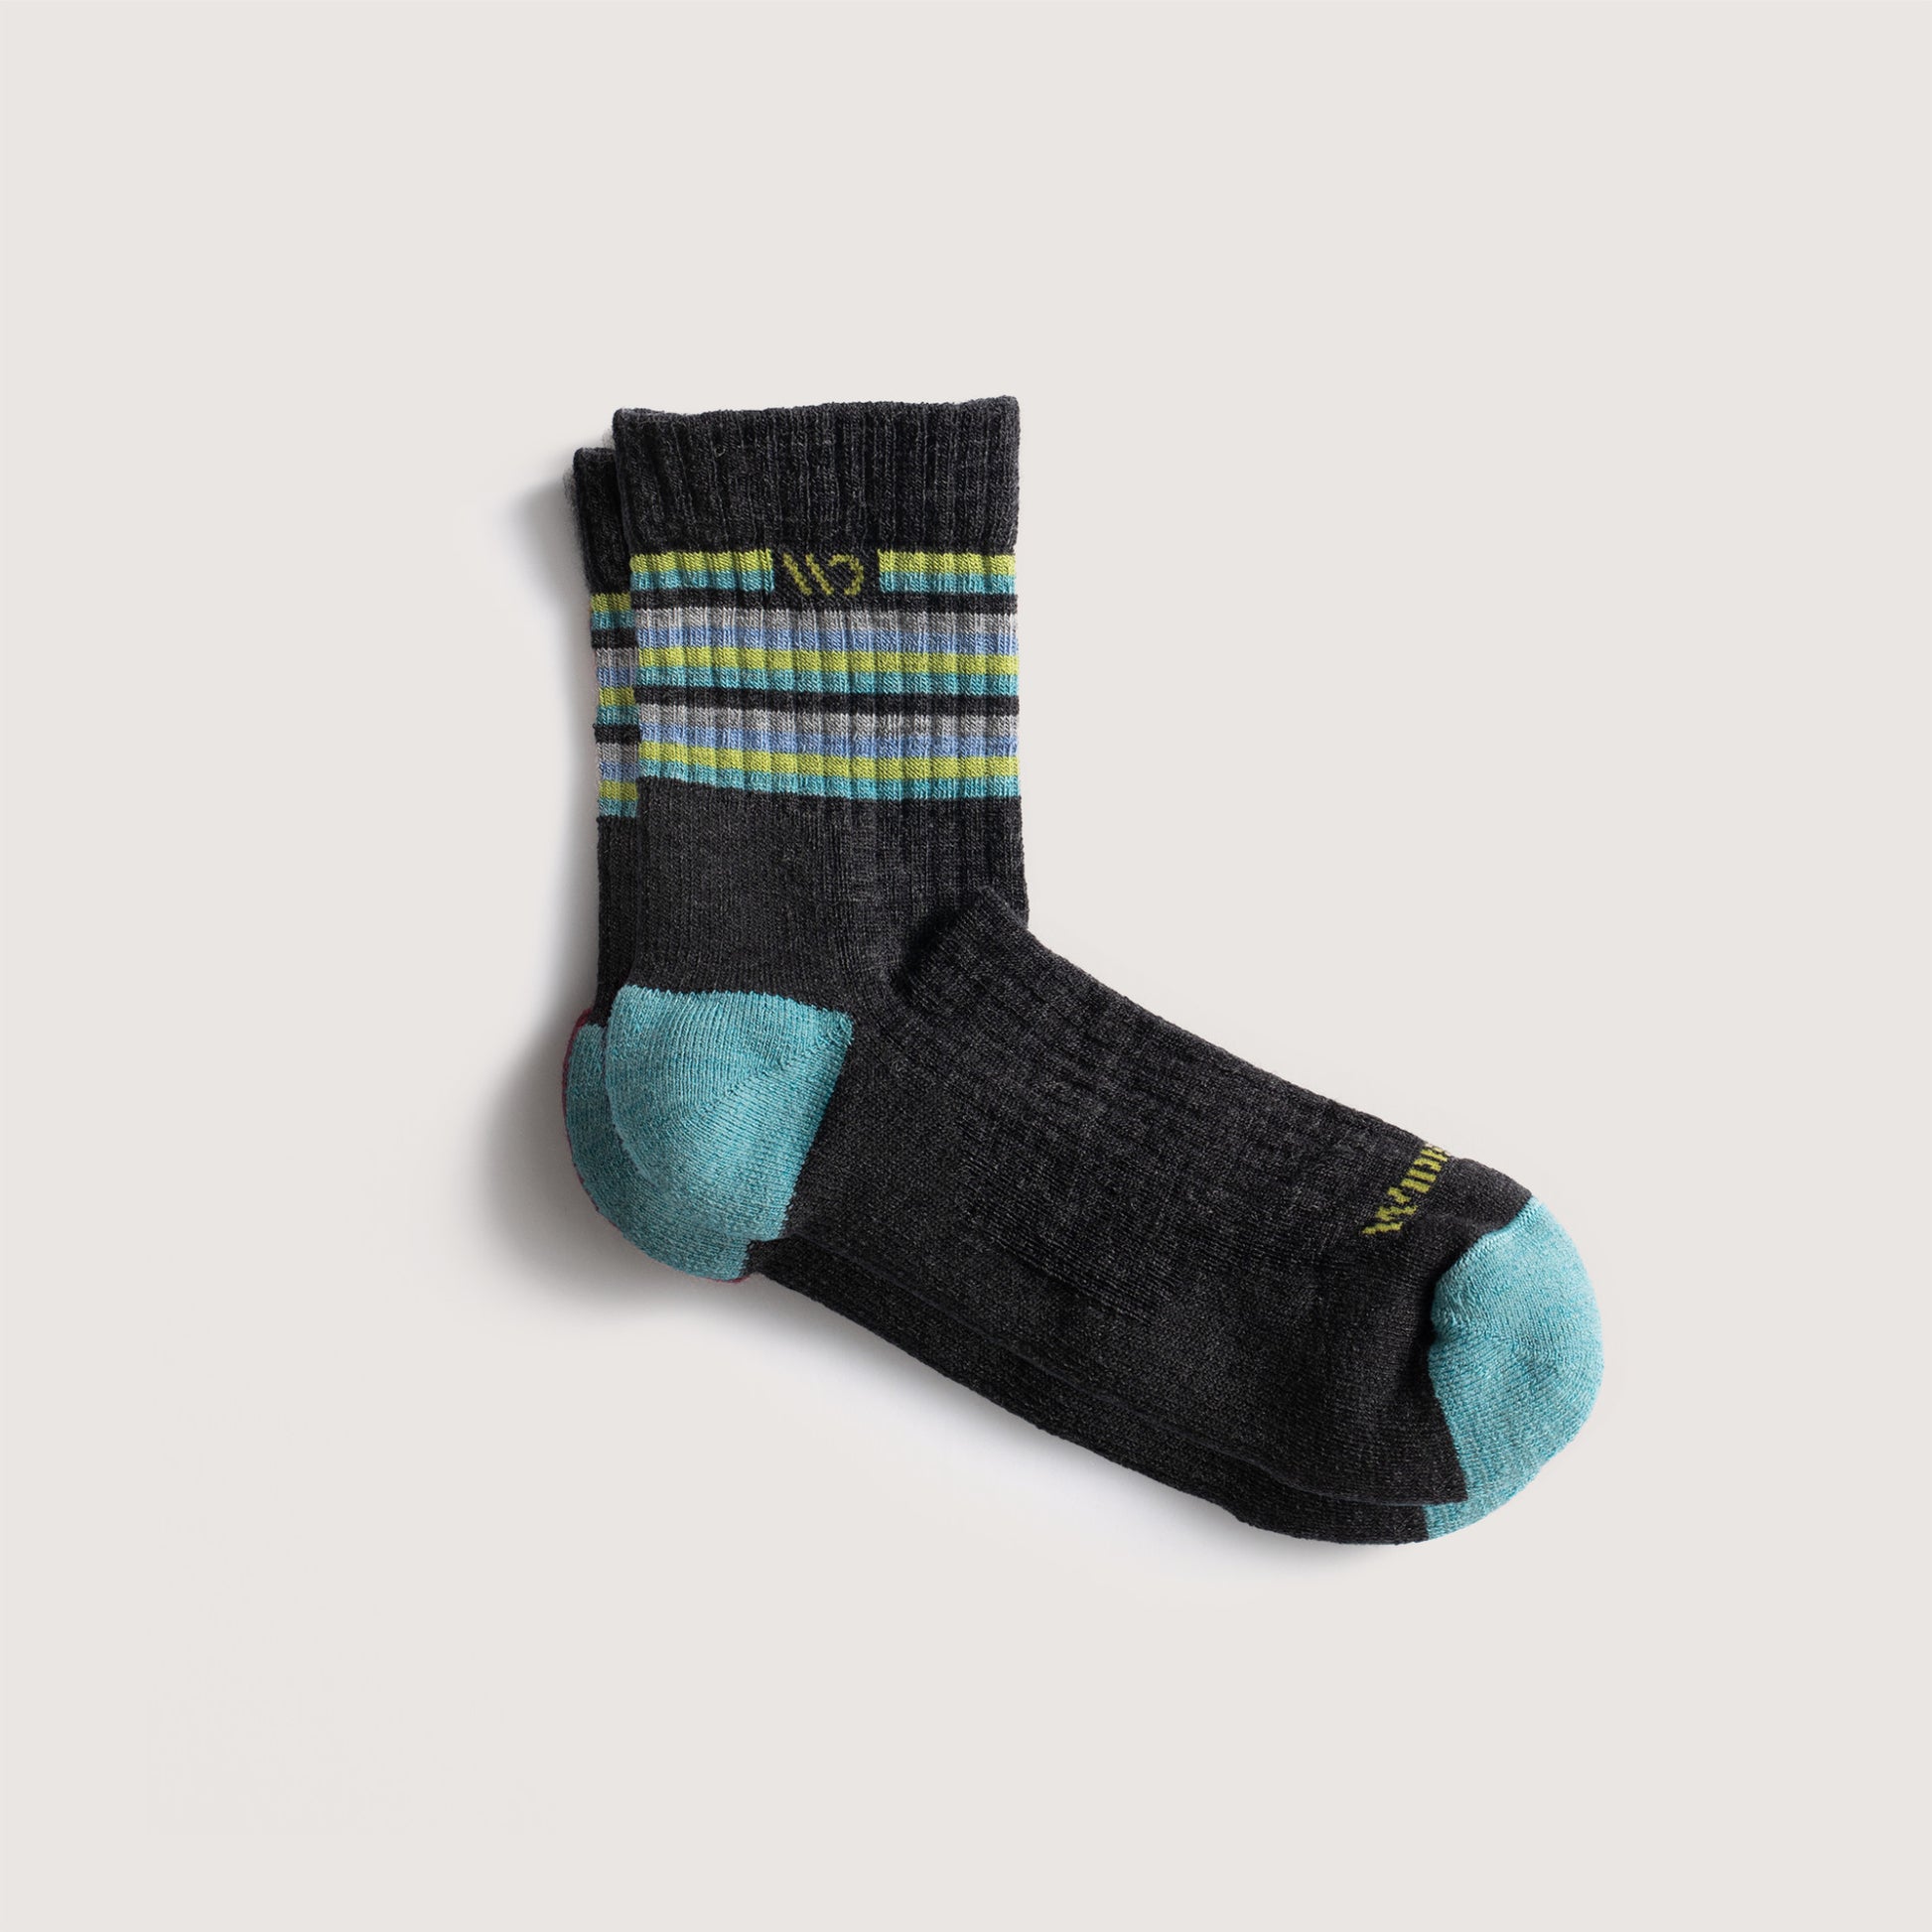 Flat socks, featuring aqua heel/toe, yellow logo, charcoal body, and stripes cuff --Charcoal